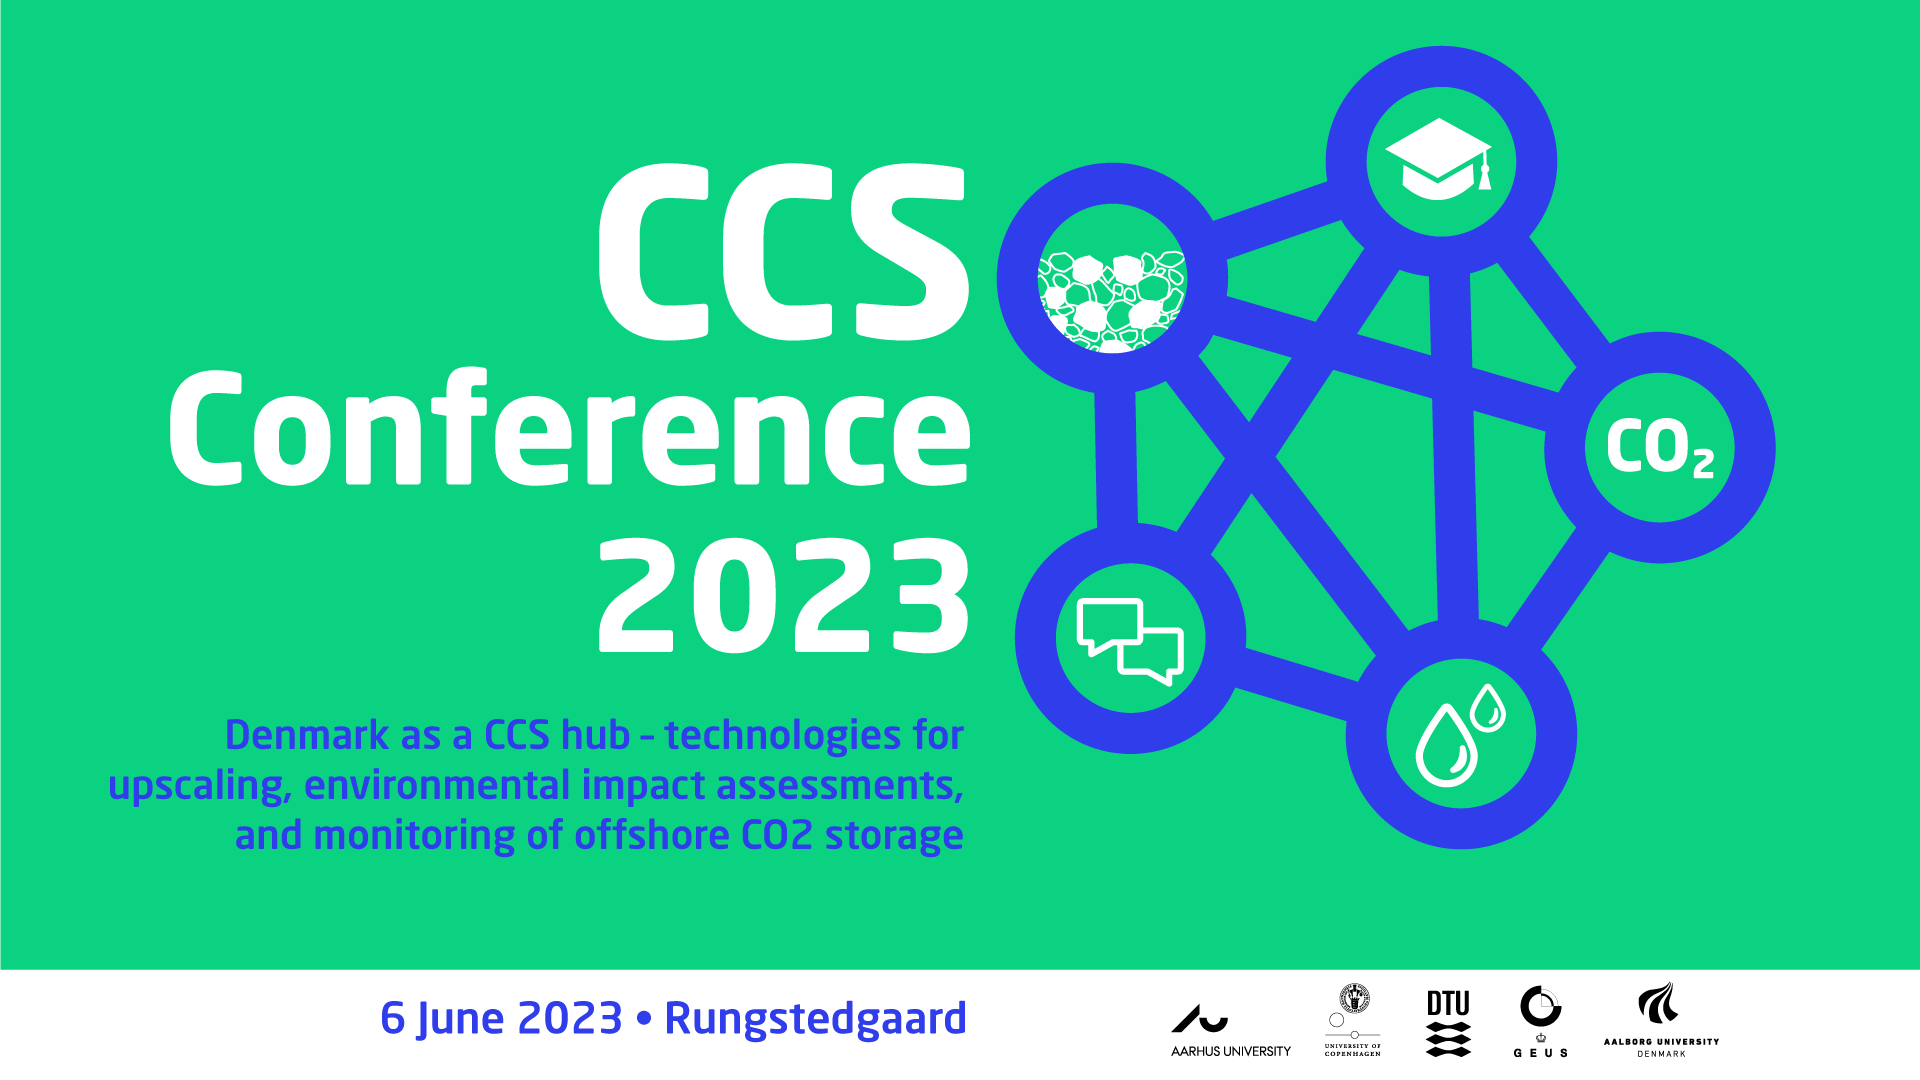 CCS Conference 2023